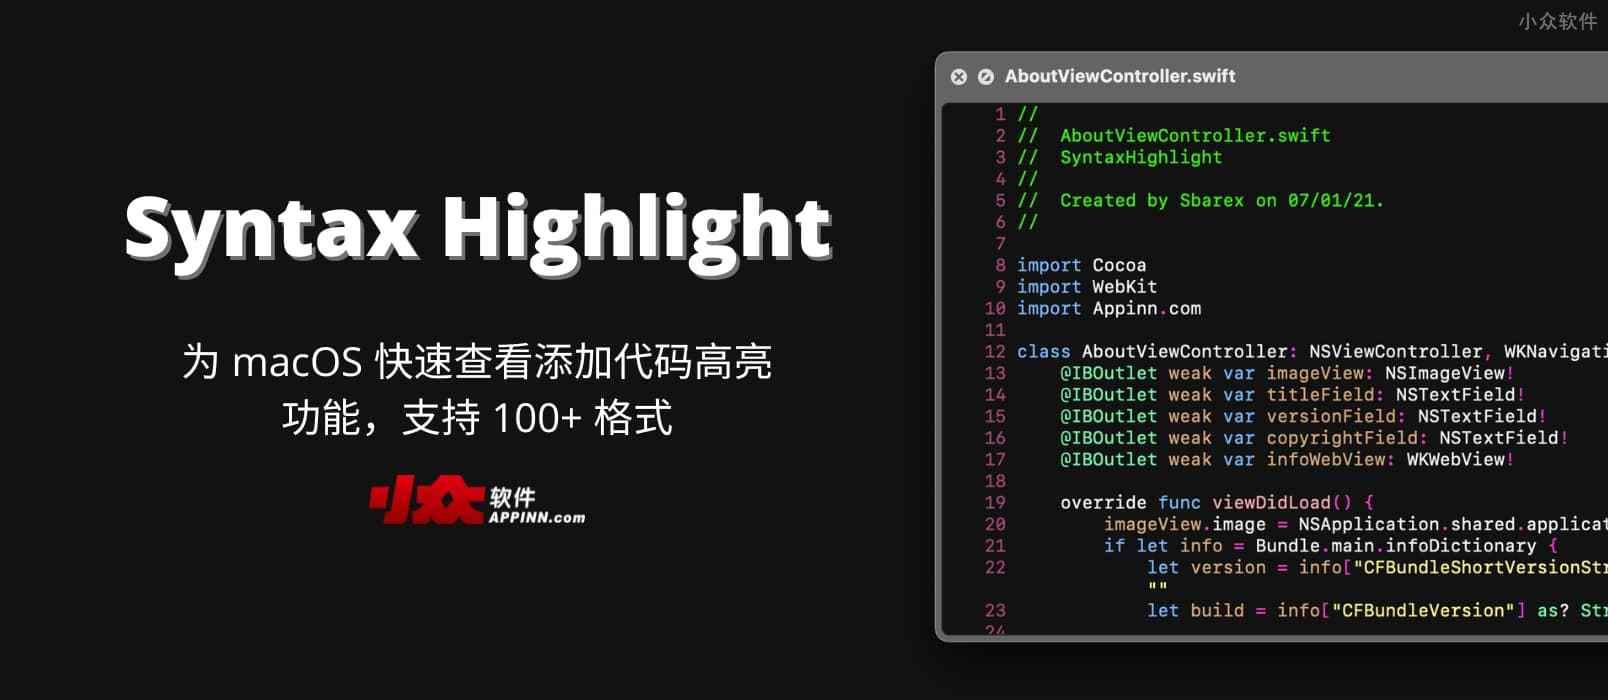 Syntax Highlight - 为 macOS 快速查看添加代码高亮功能，支持 100+ 格式